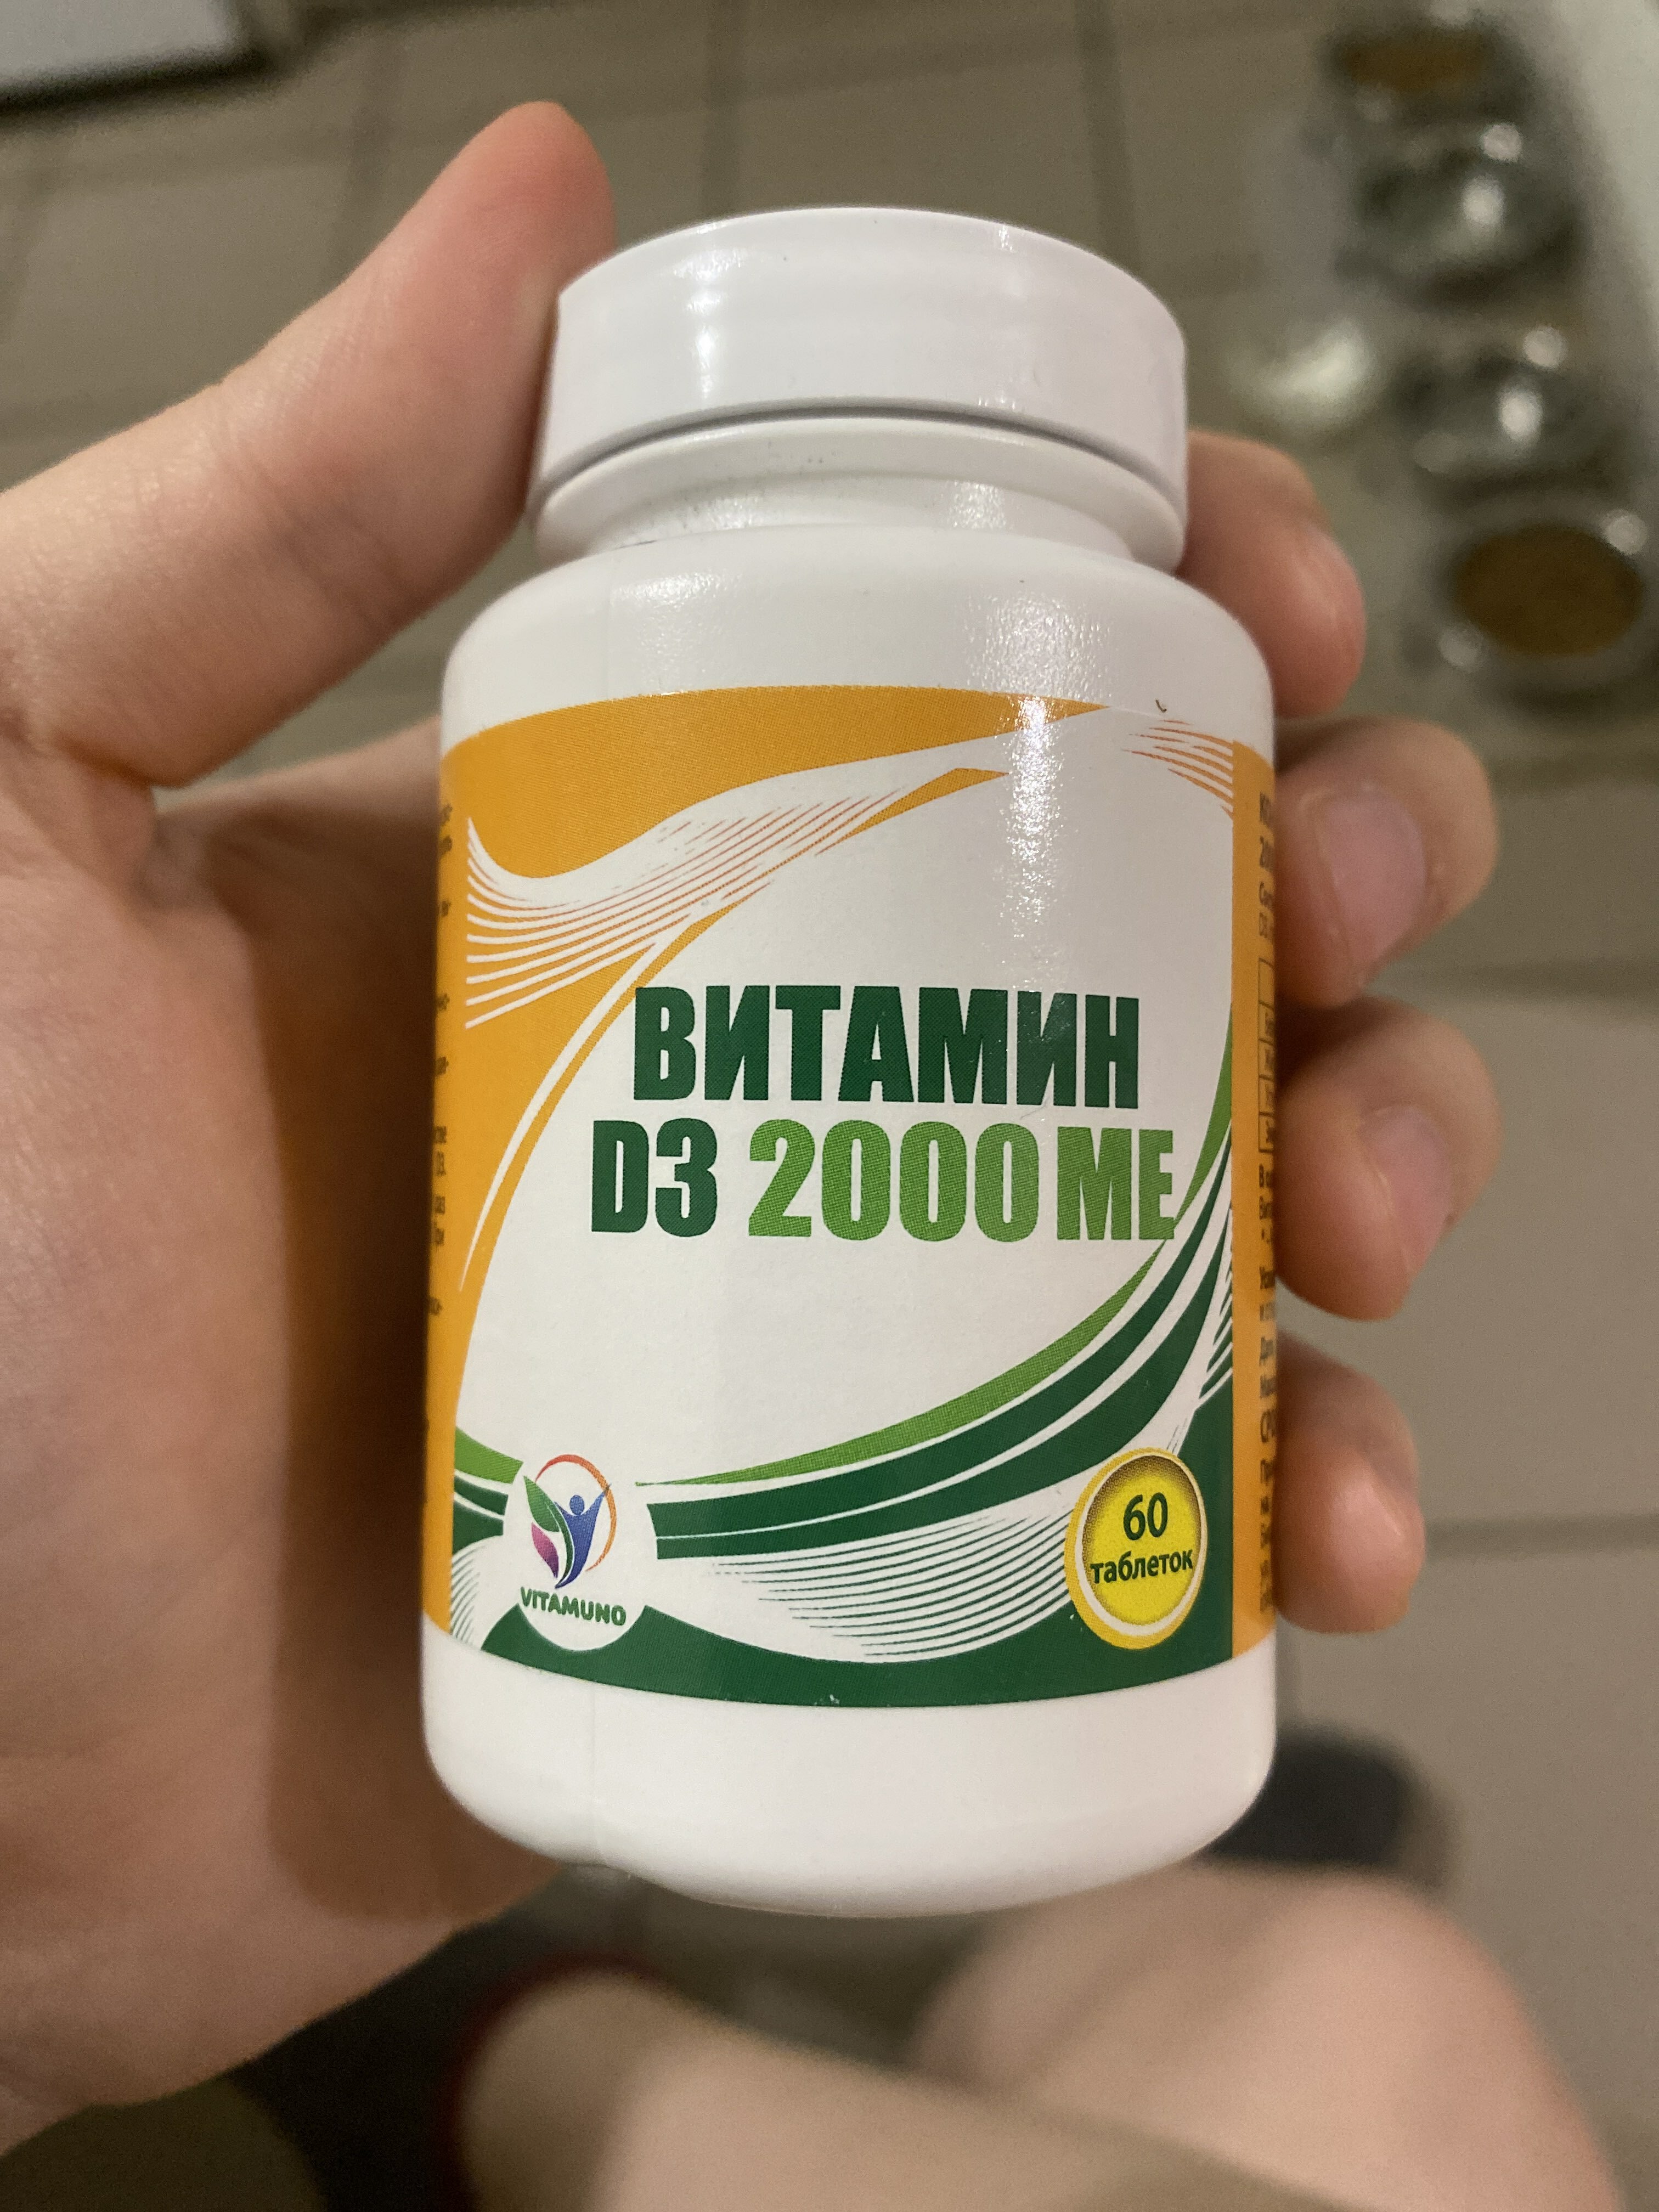 Фотография покупателя товара Витамин D3 2000 ME Vitamuno, 60 таблеток